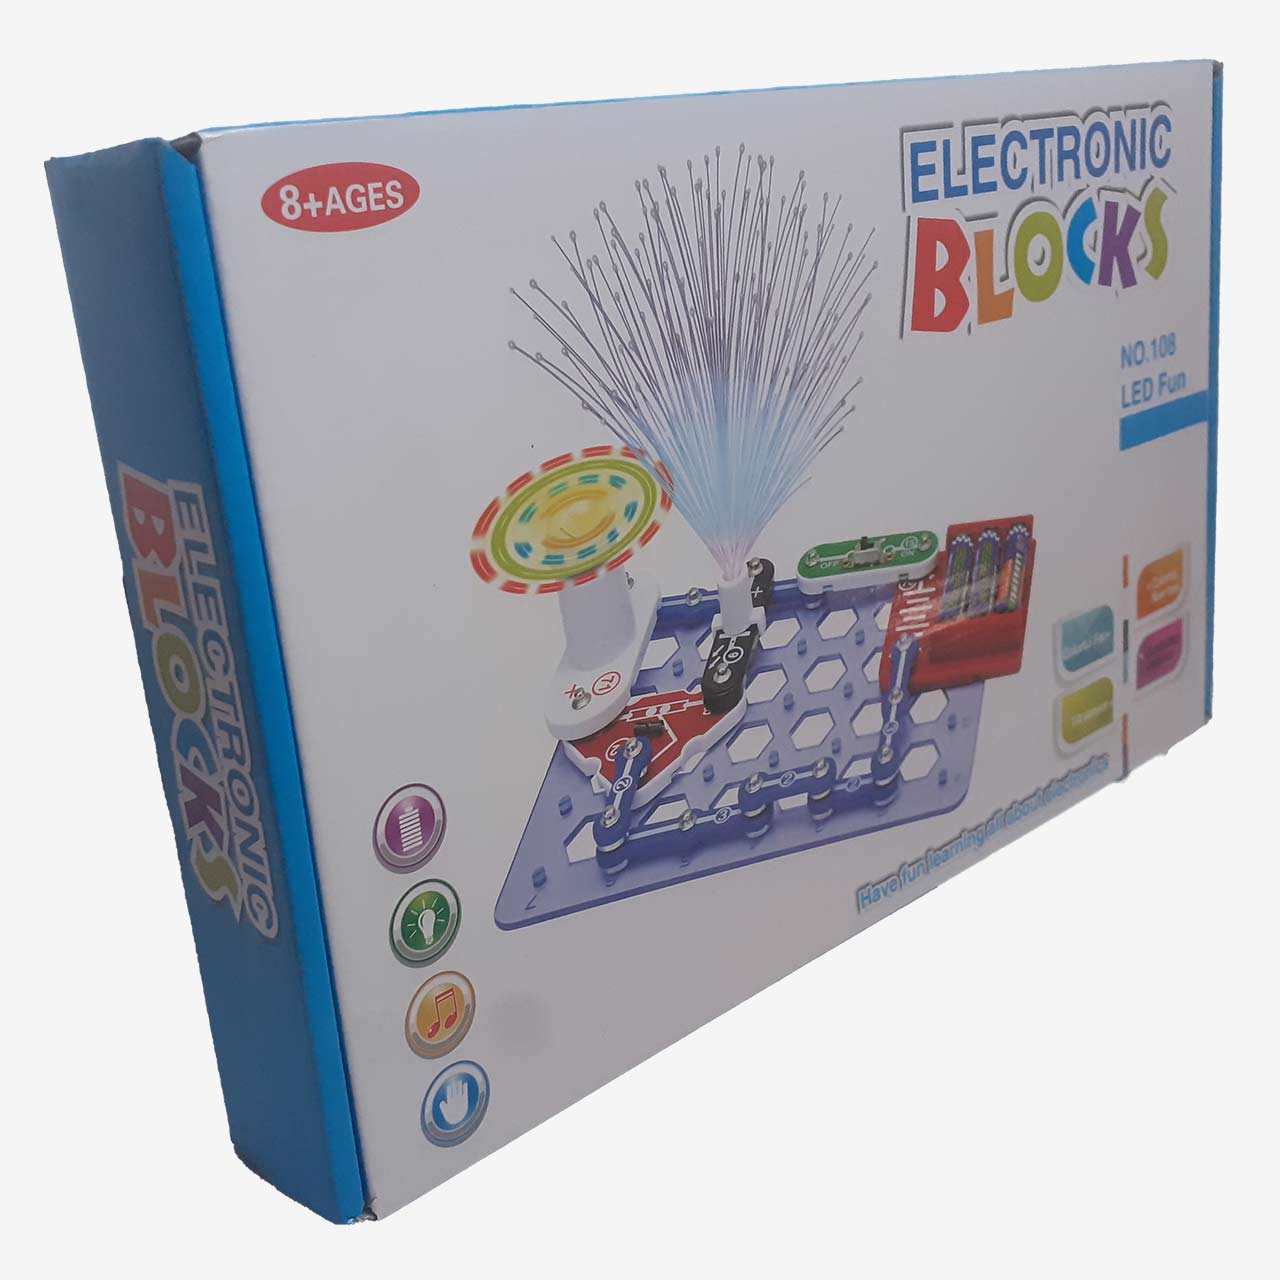 Electronic blocks- العاب ذكاء - العاب الذكاء - ألعاب ذكاء -لعبة الدوائر الكهربائية - toys store